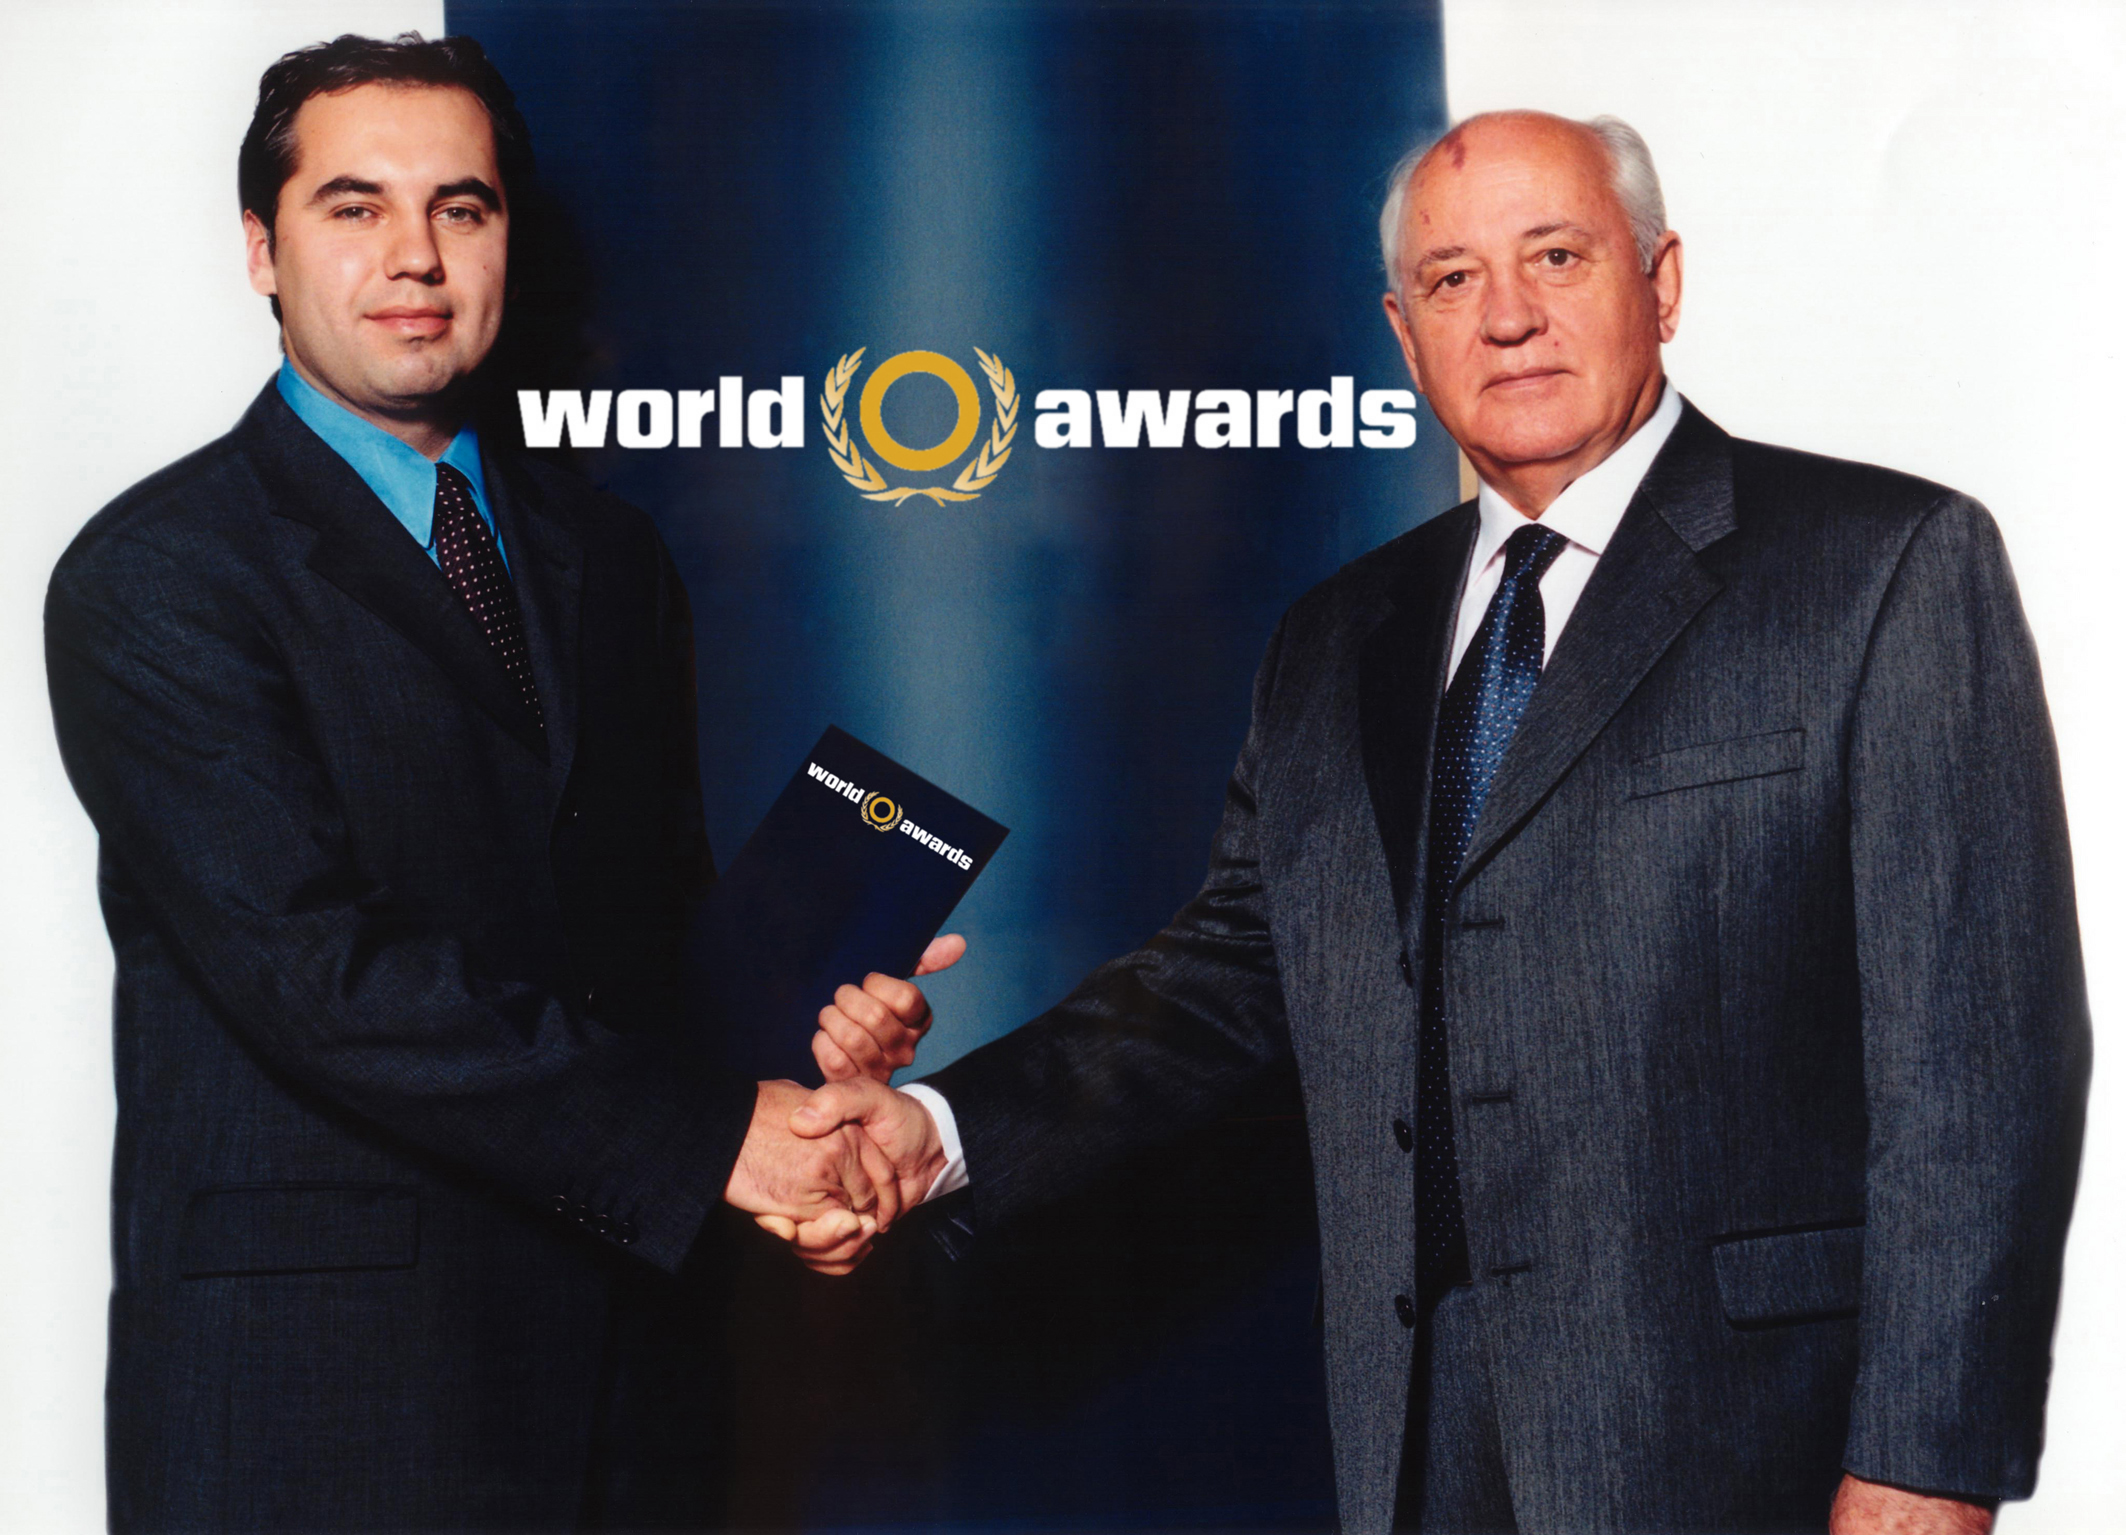 World Awards founders Georg Kindel and Nobel Peace Prize Laureate Mikhail Gorbachev, last President of the Soviet Union